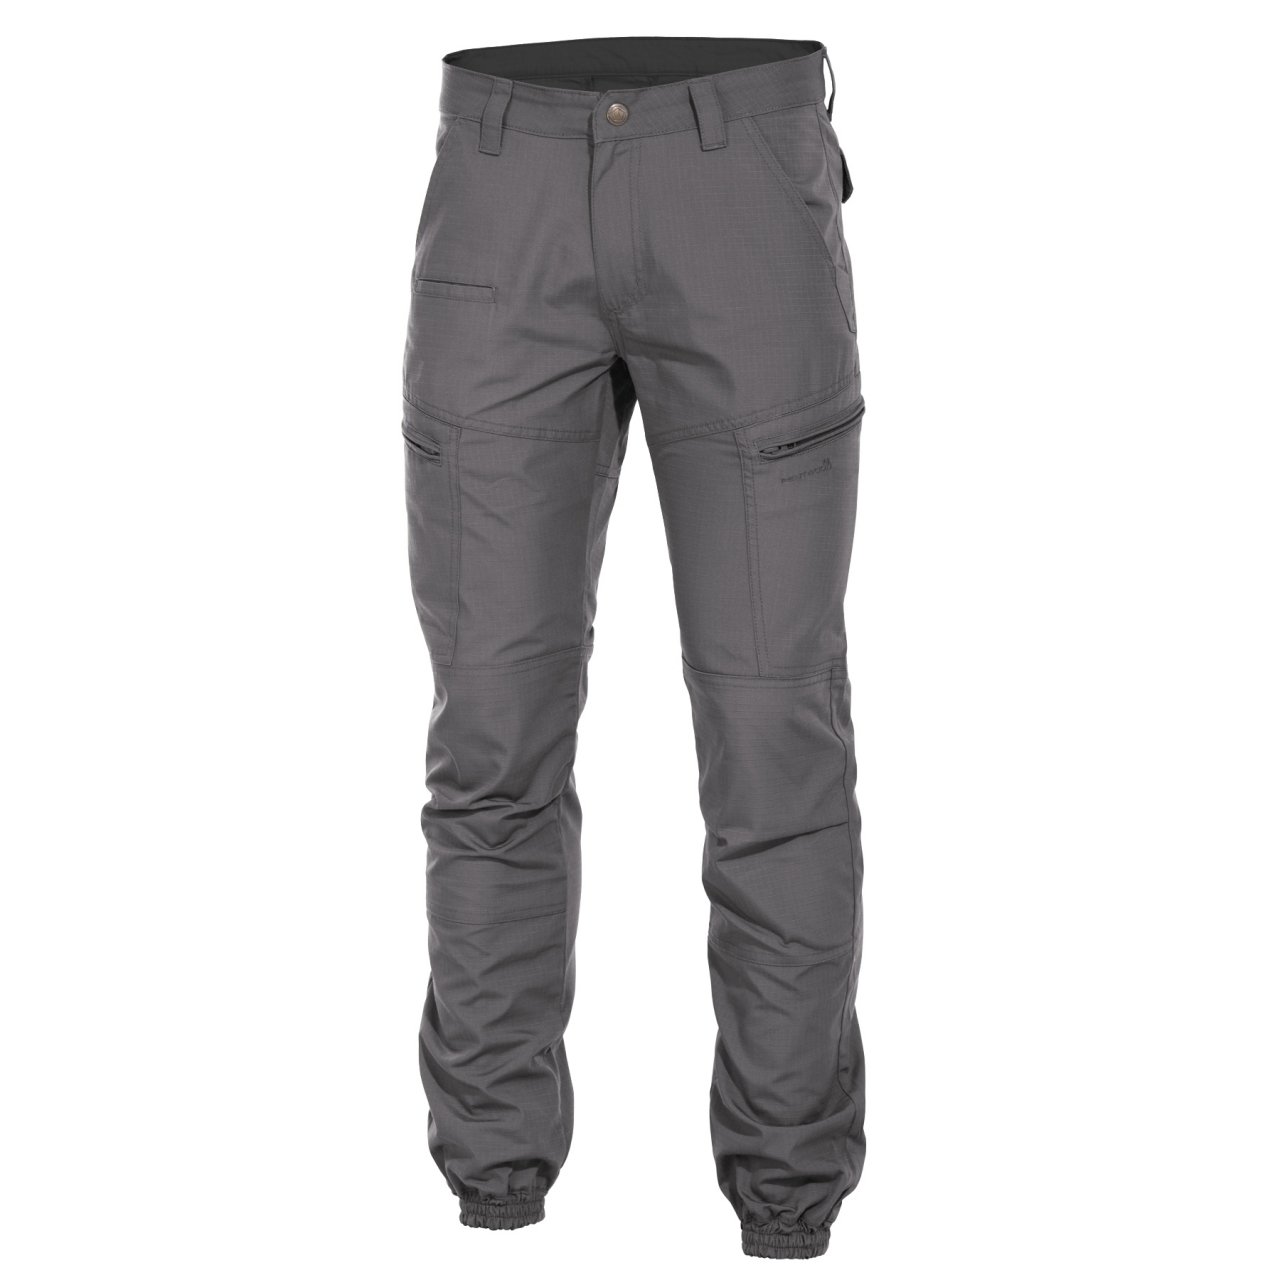 Kalhoty Pentagon Ypero - antracitové, 44 XL